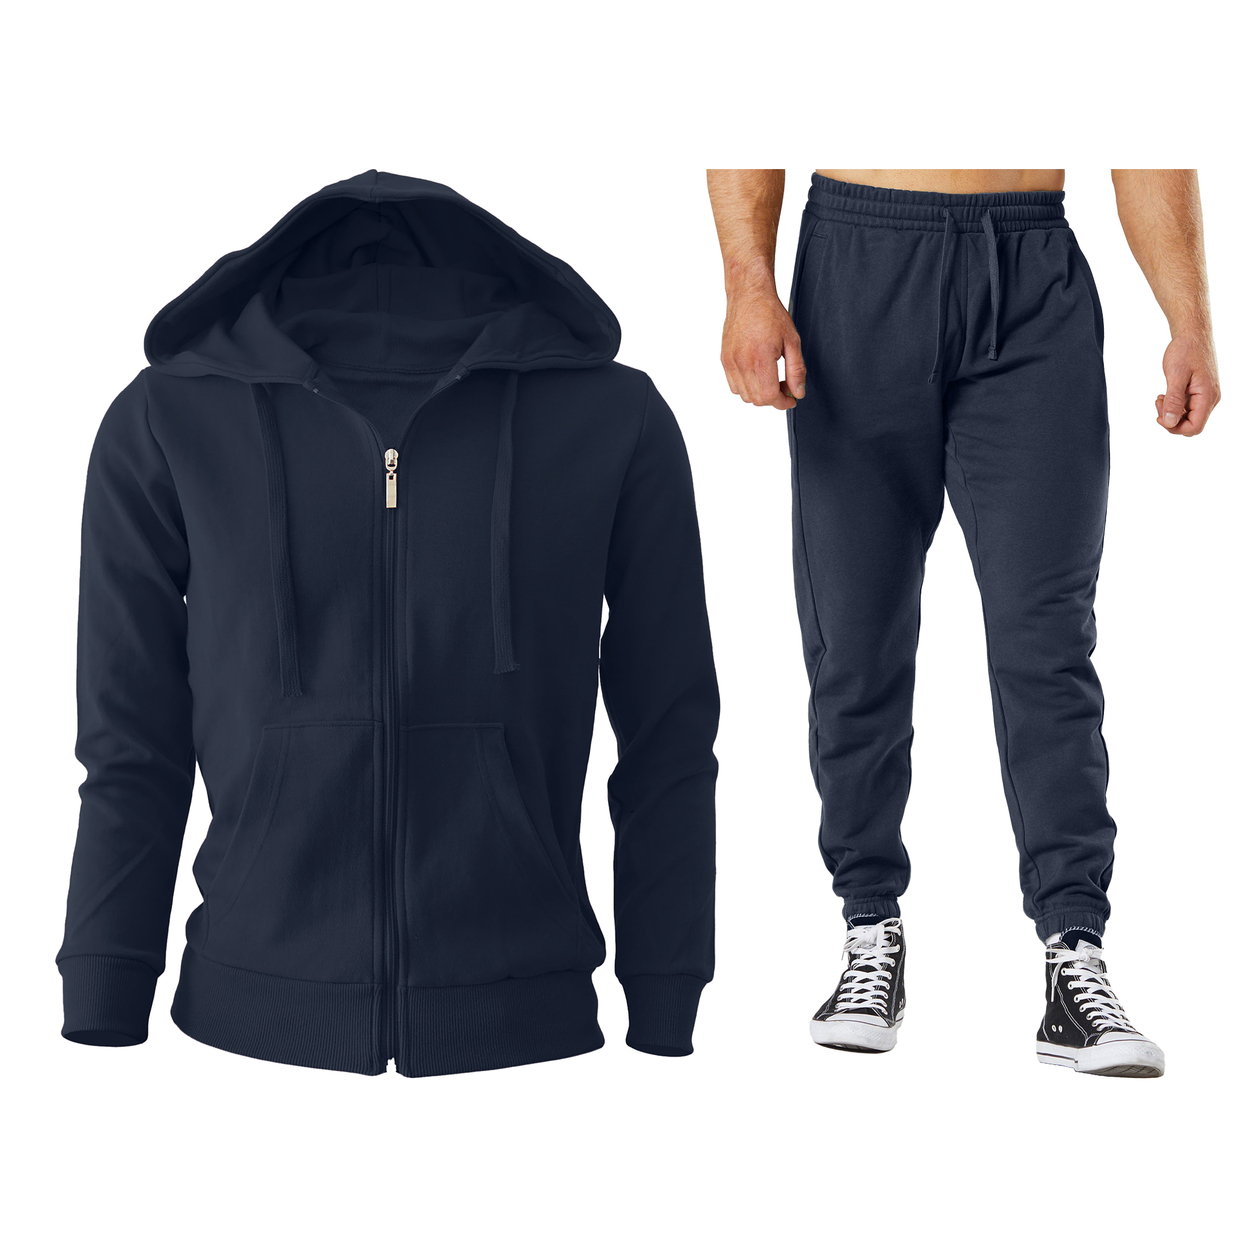 4-Piece: Men's Winter Warm Cozy Athletic Multi-Pockets BIG & TALL Sweatsuit Set - Black, Small